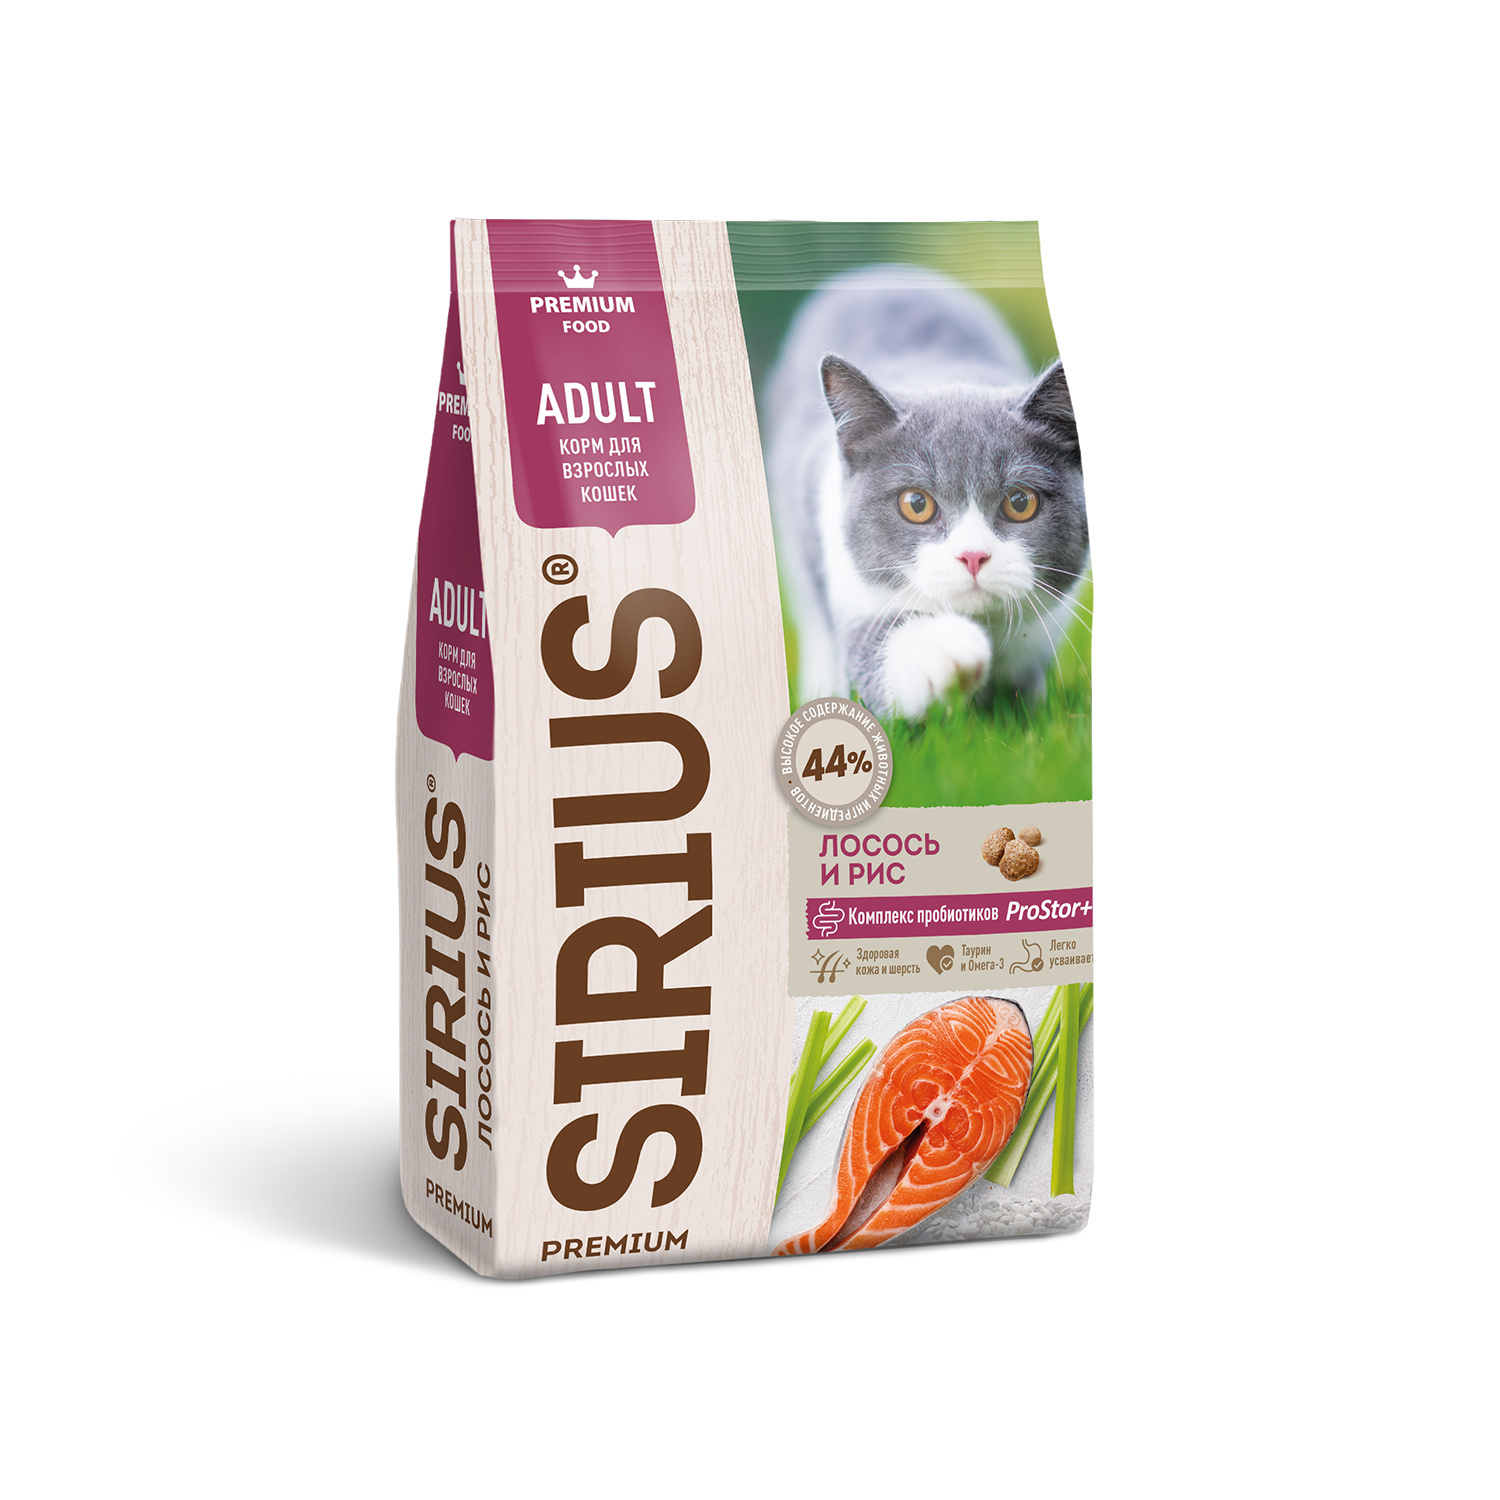 Sirius Sirius сухой корм для кошек, лосось и рис (10 кг) sirius sirius сухой корм для стерилизованных кошек утка и клюква 10 кг